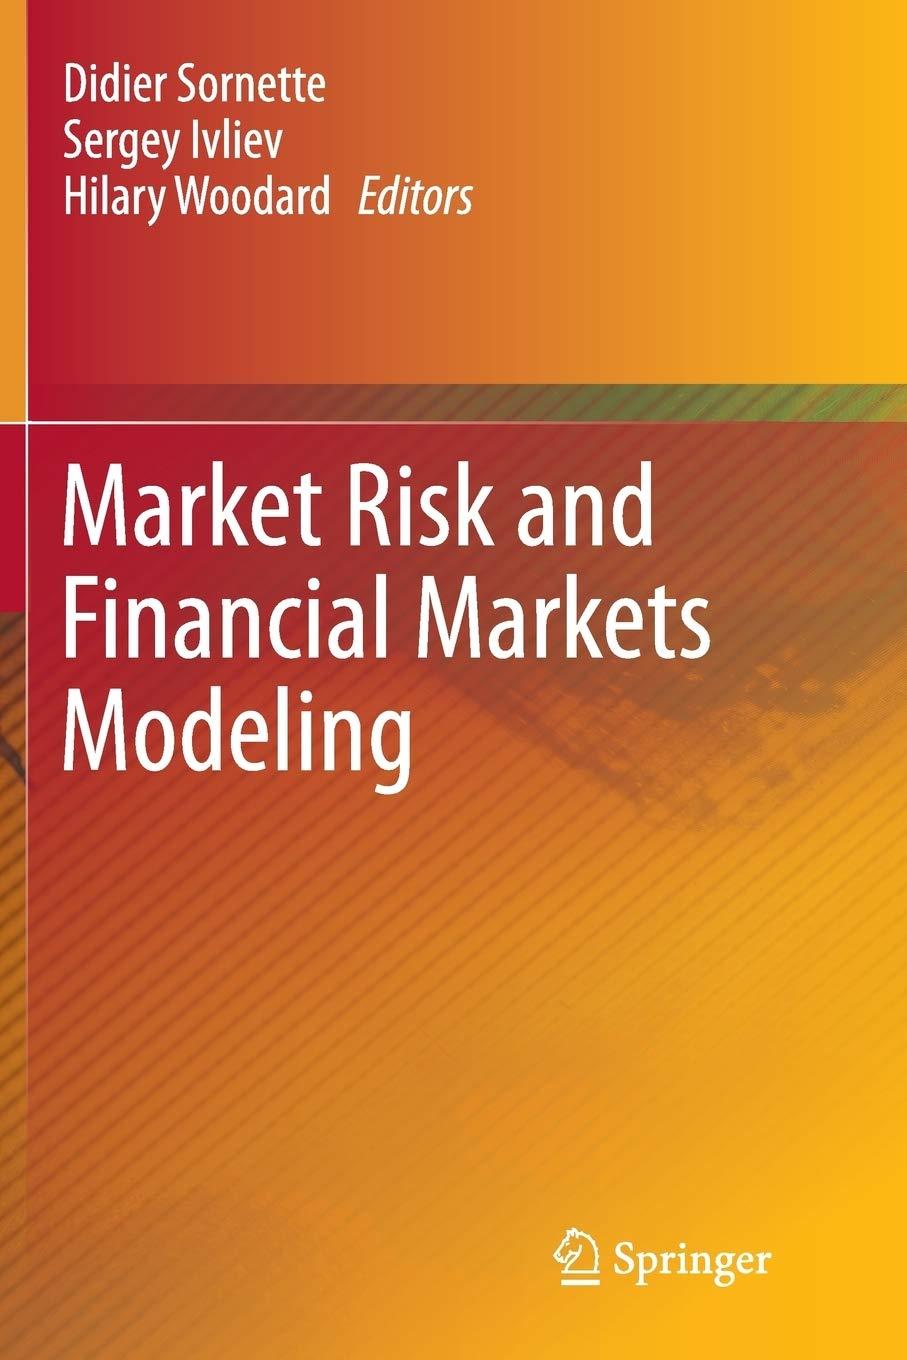 market risk and financial markets modeling 1st edition didier sornette, sergey ivliev, hilary woodard